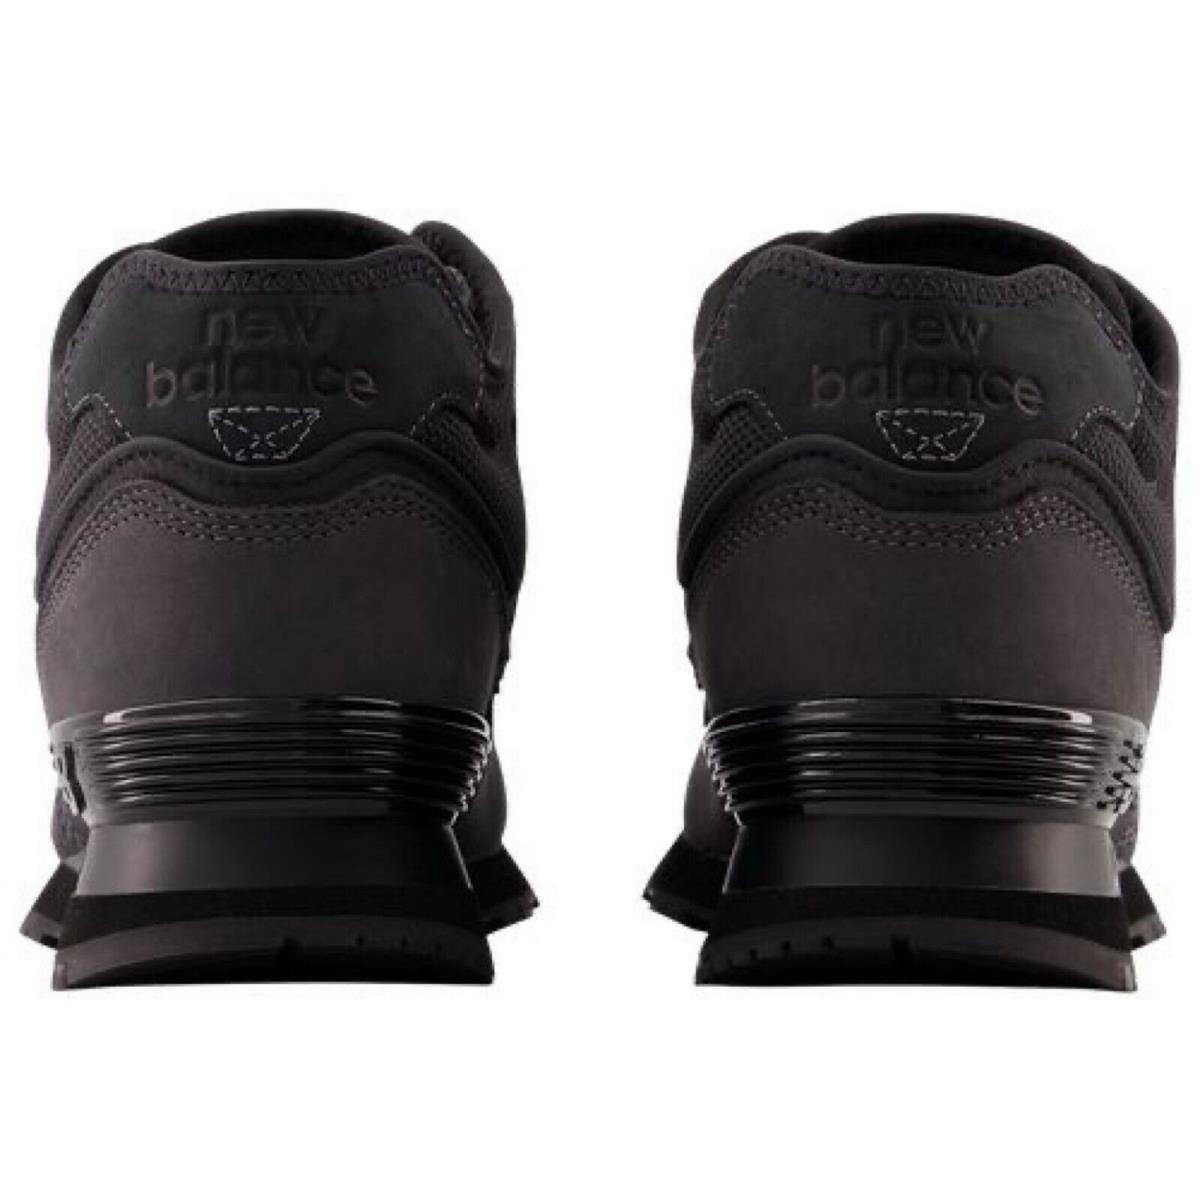 New Balance shoes  - Brown , Grey/Black Manufacturer 9